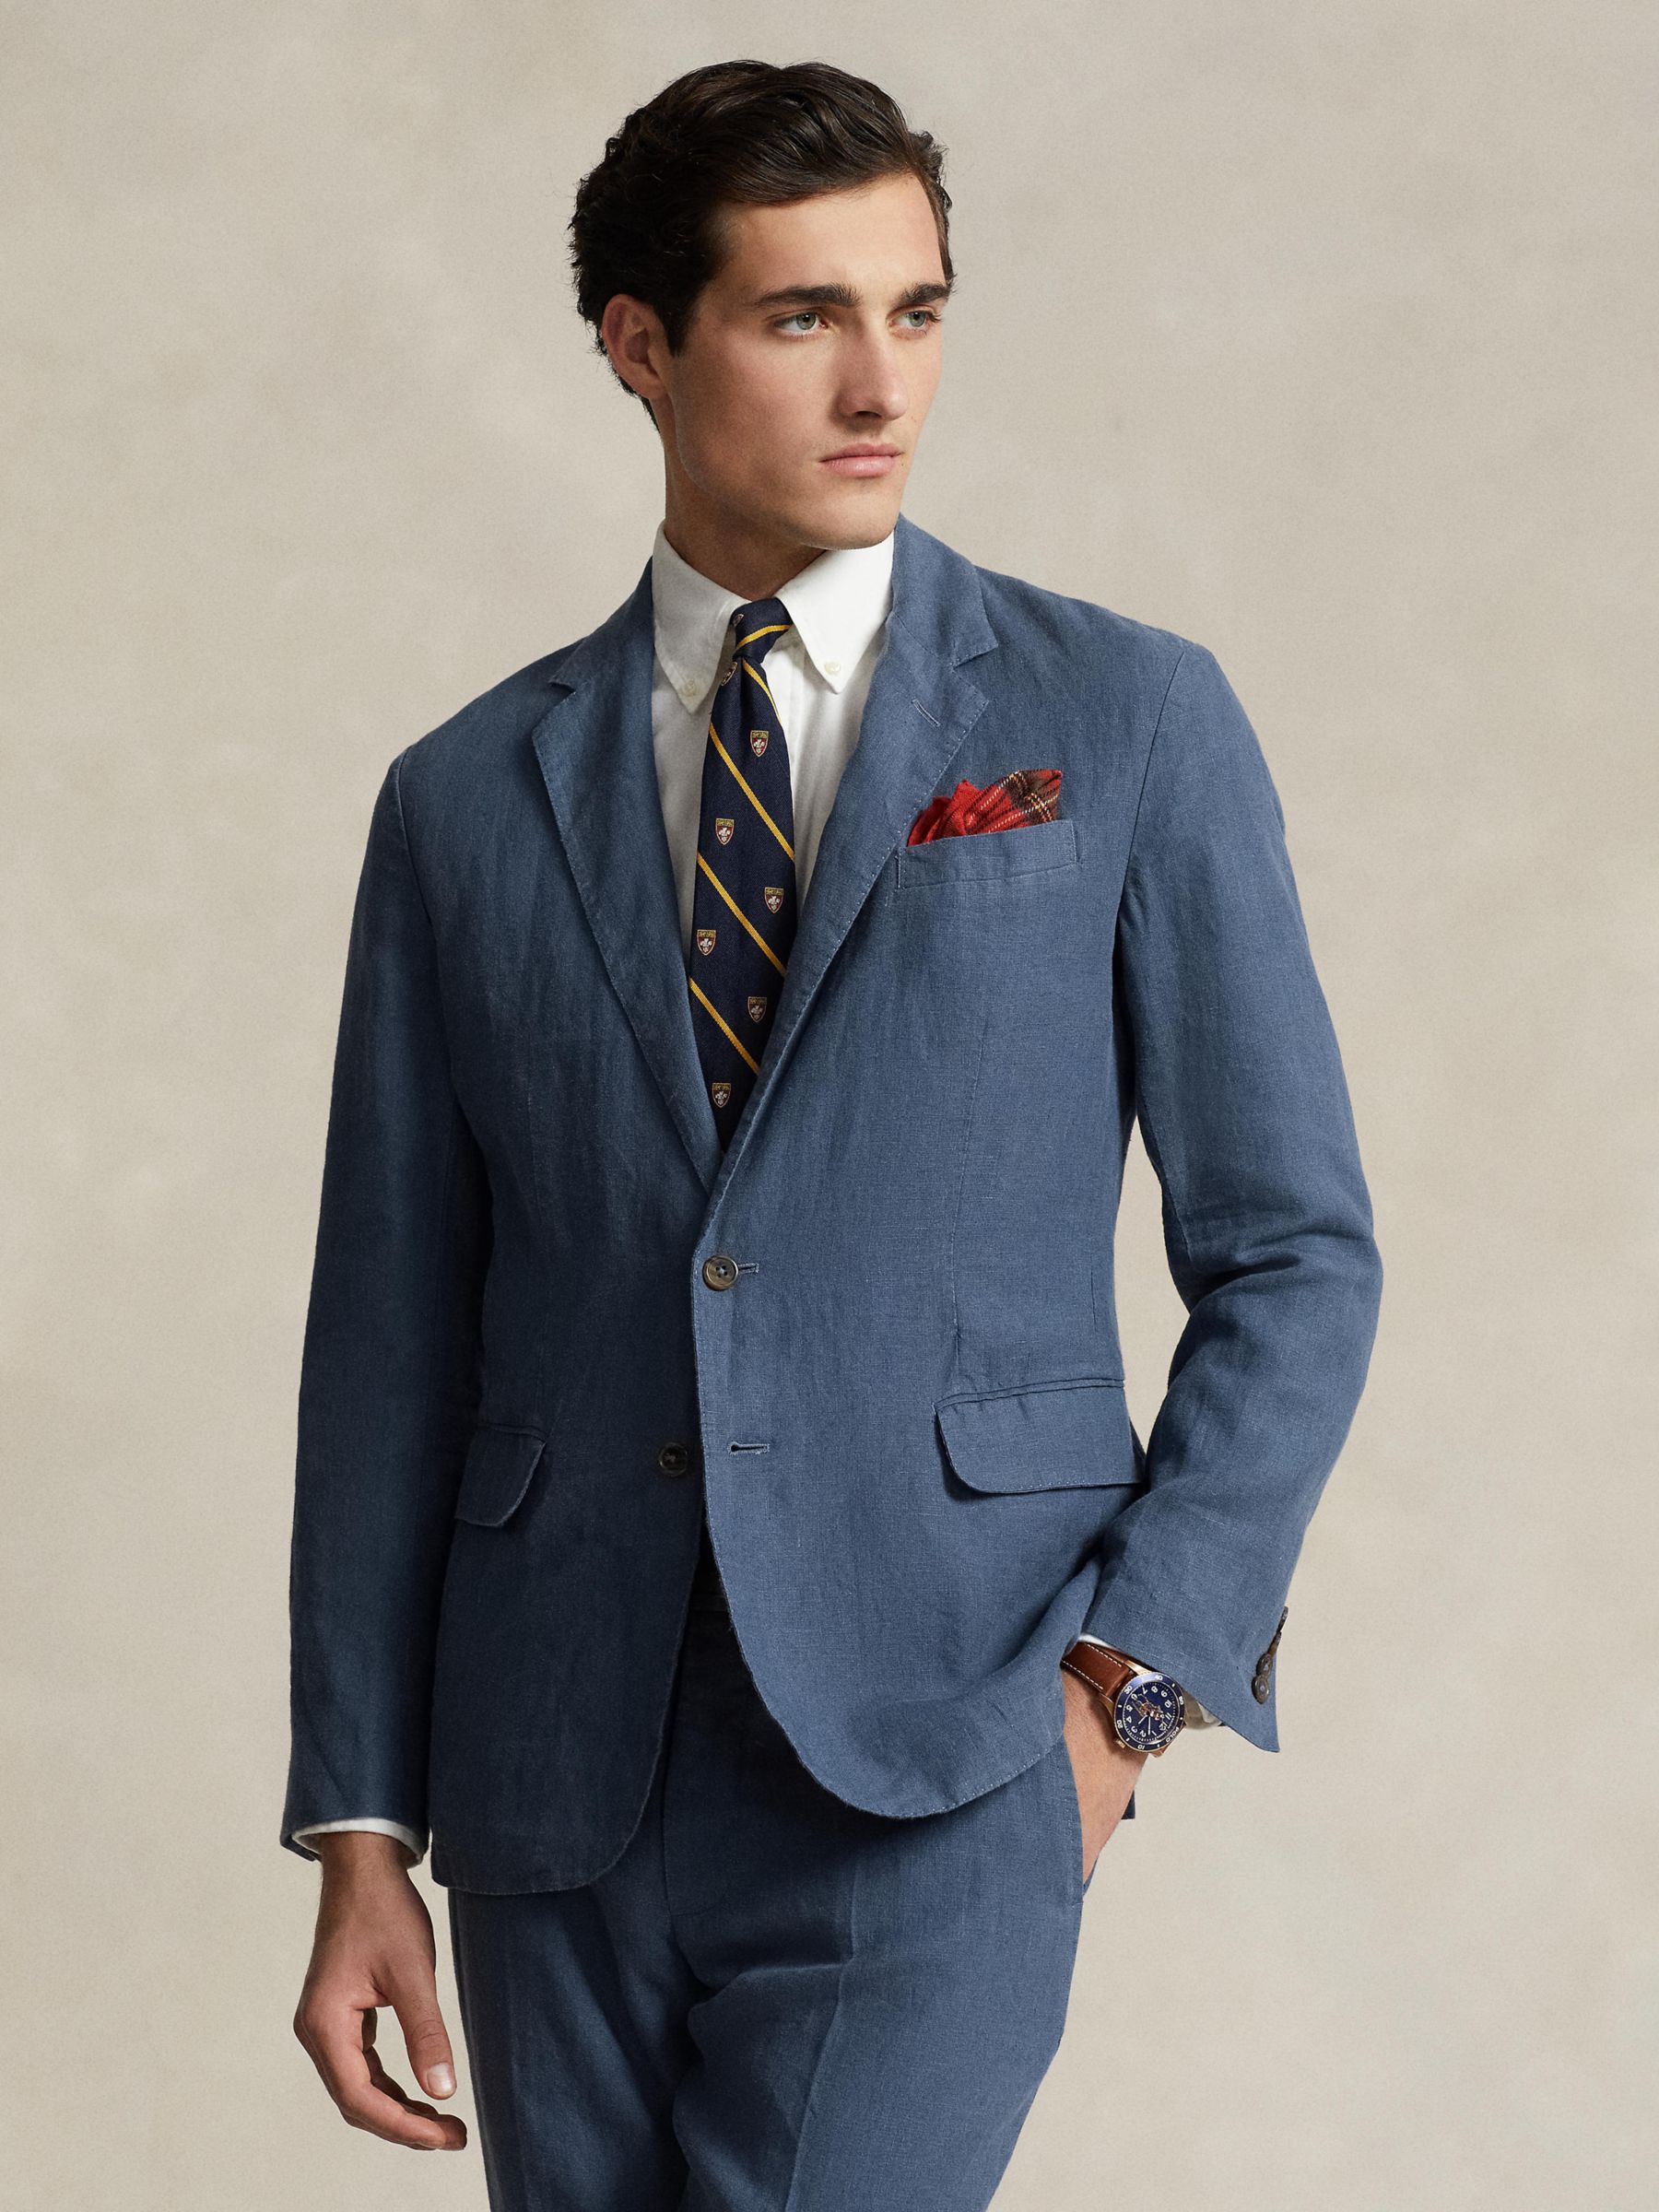 Ralph Lauren Polo Soft Modern Linen Suit Jacket, Corsair Blue, 46R